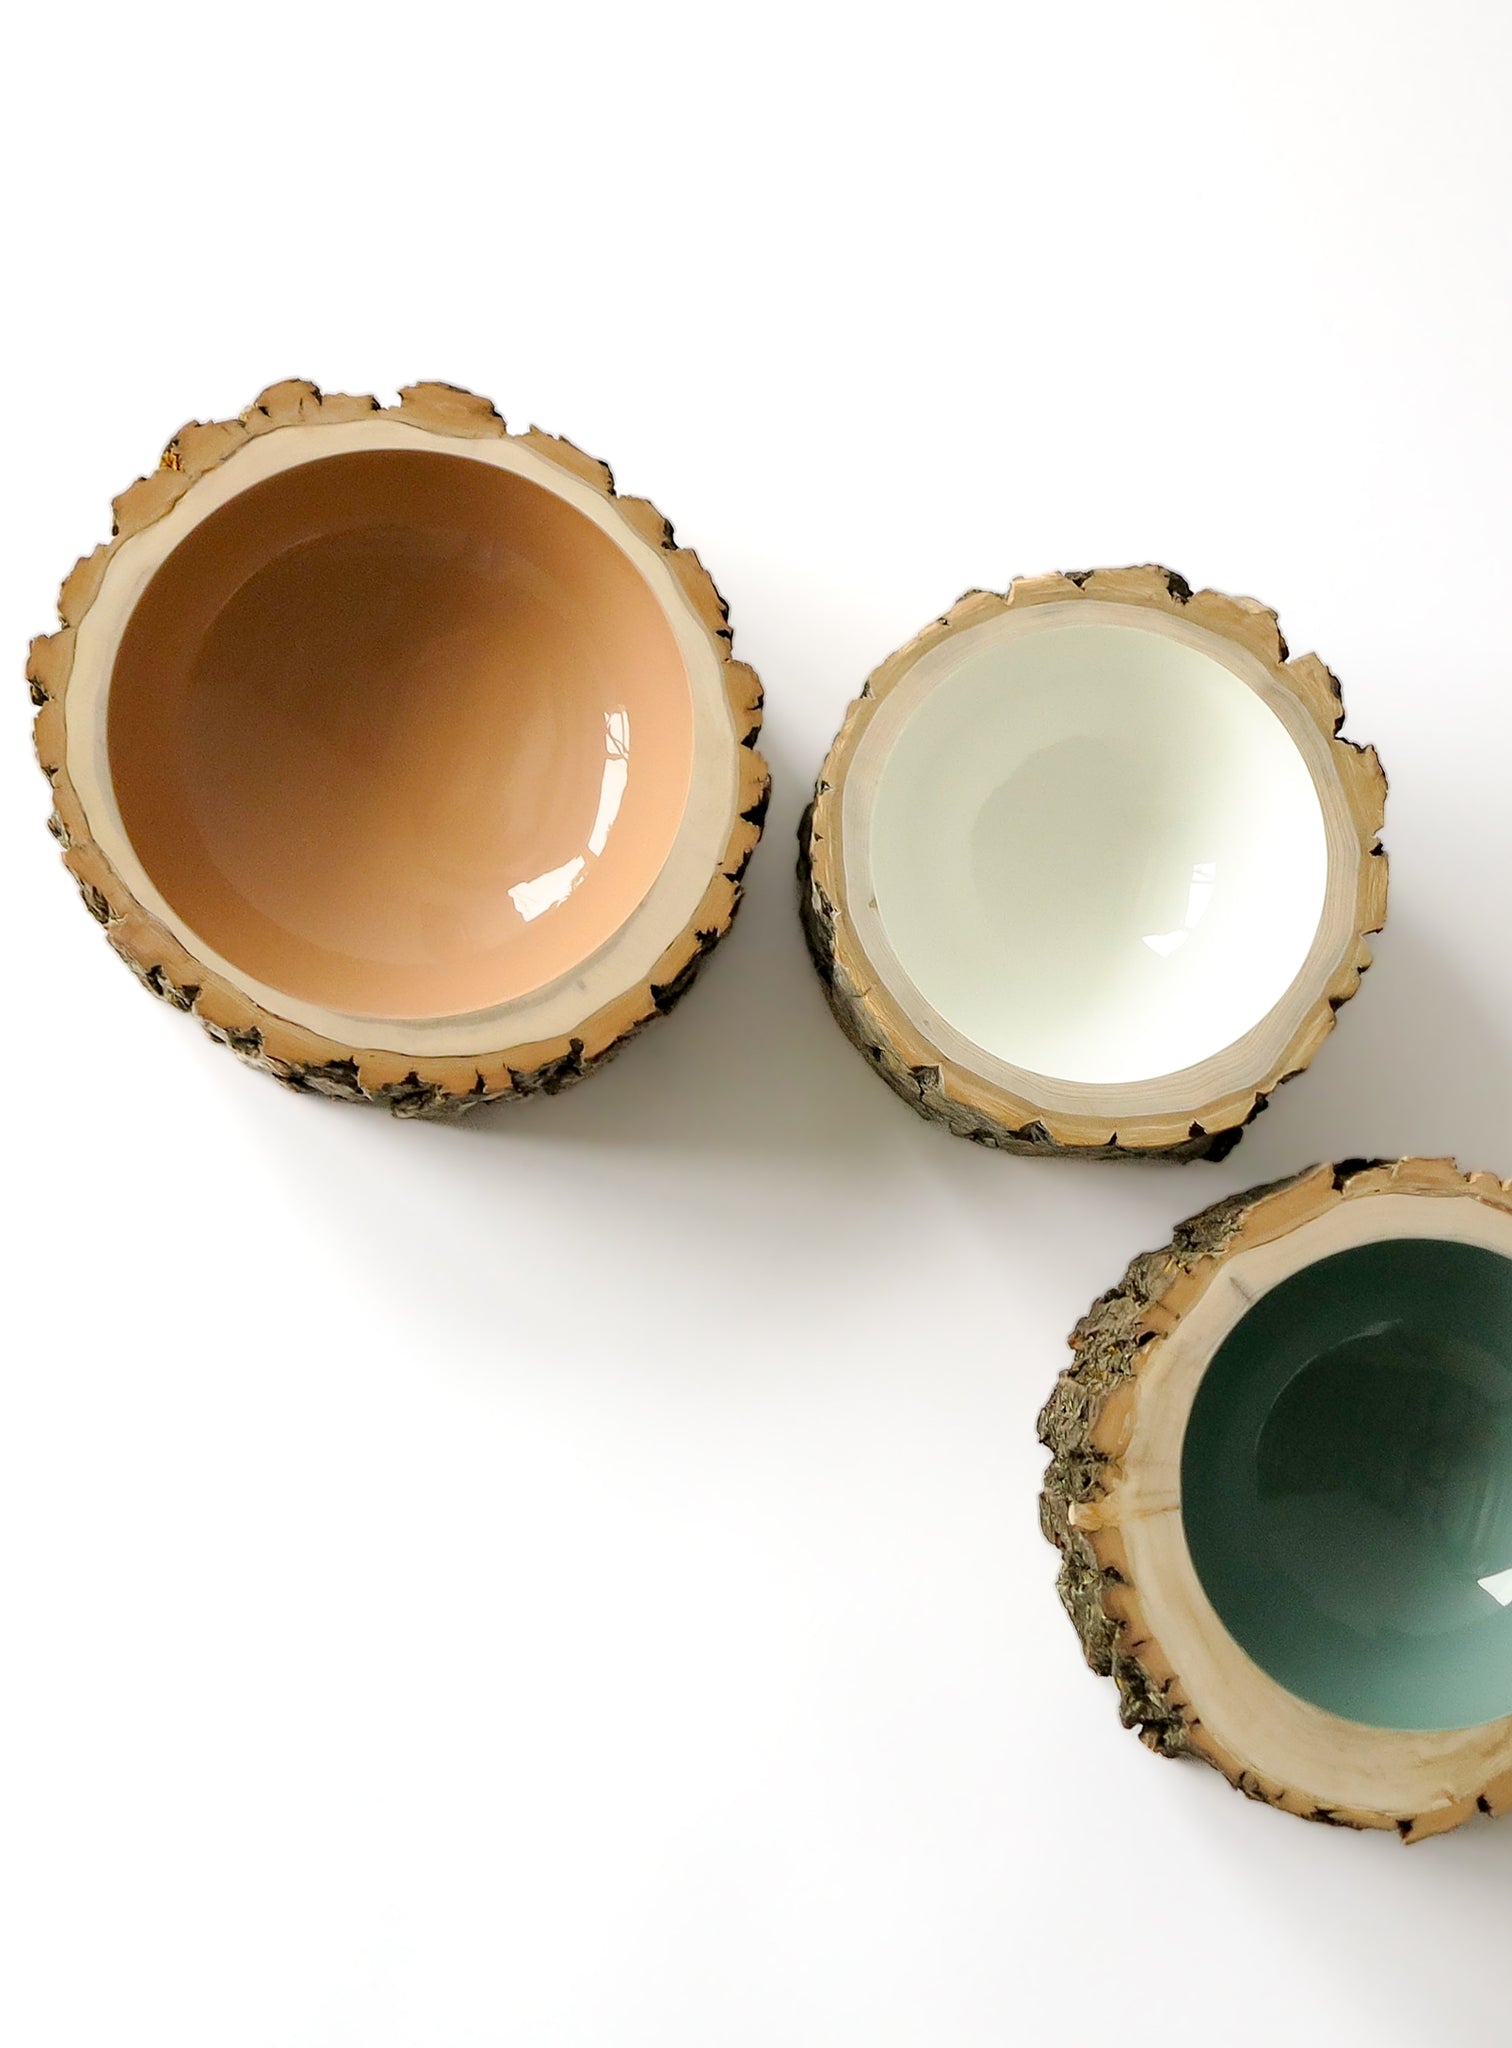 Log Bowl | Size 8 | Marshmallow